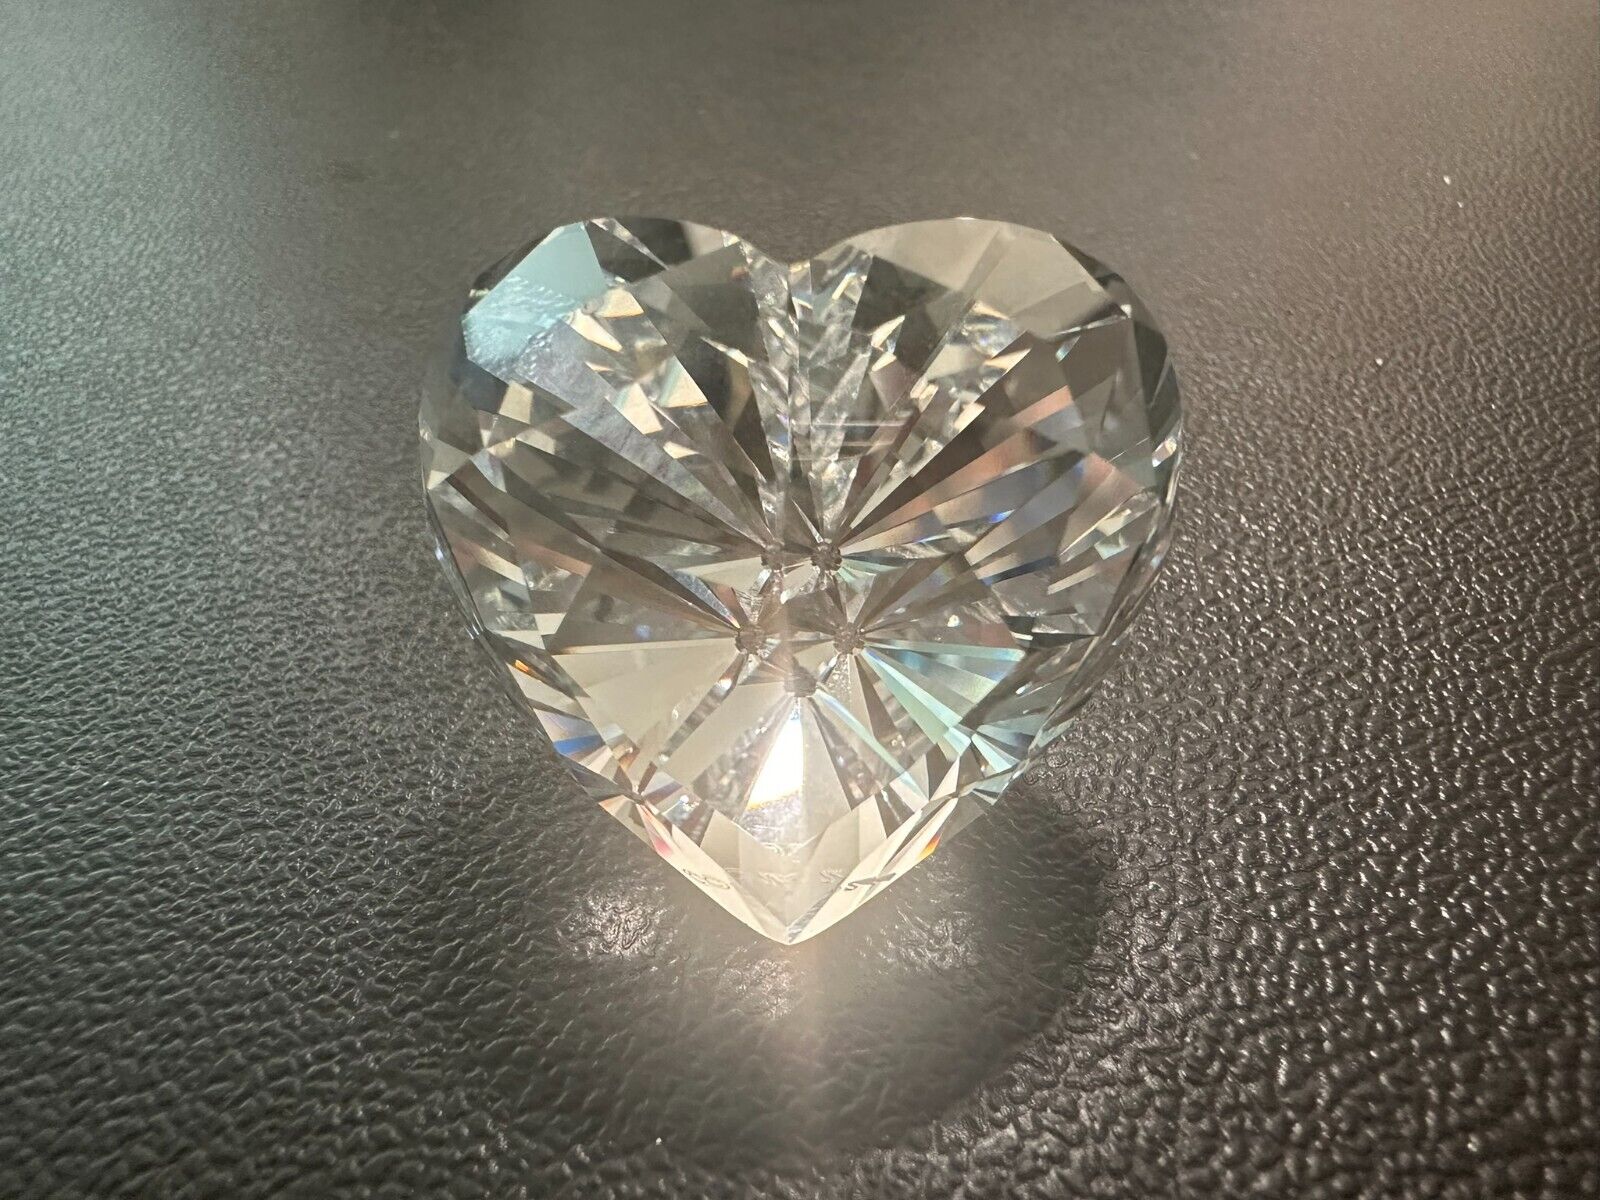 Swarovski small Crystal Heart shaped figurine Diamond cut Paper Weight